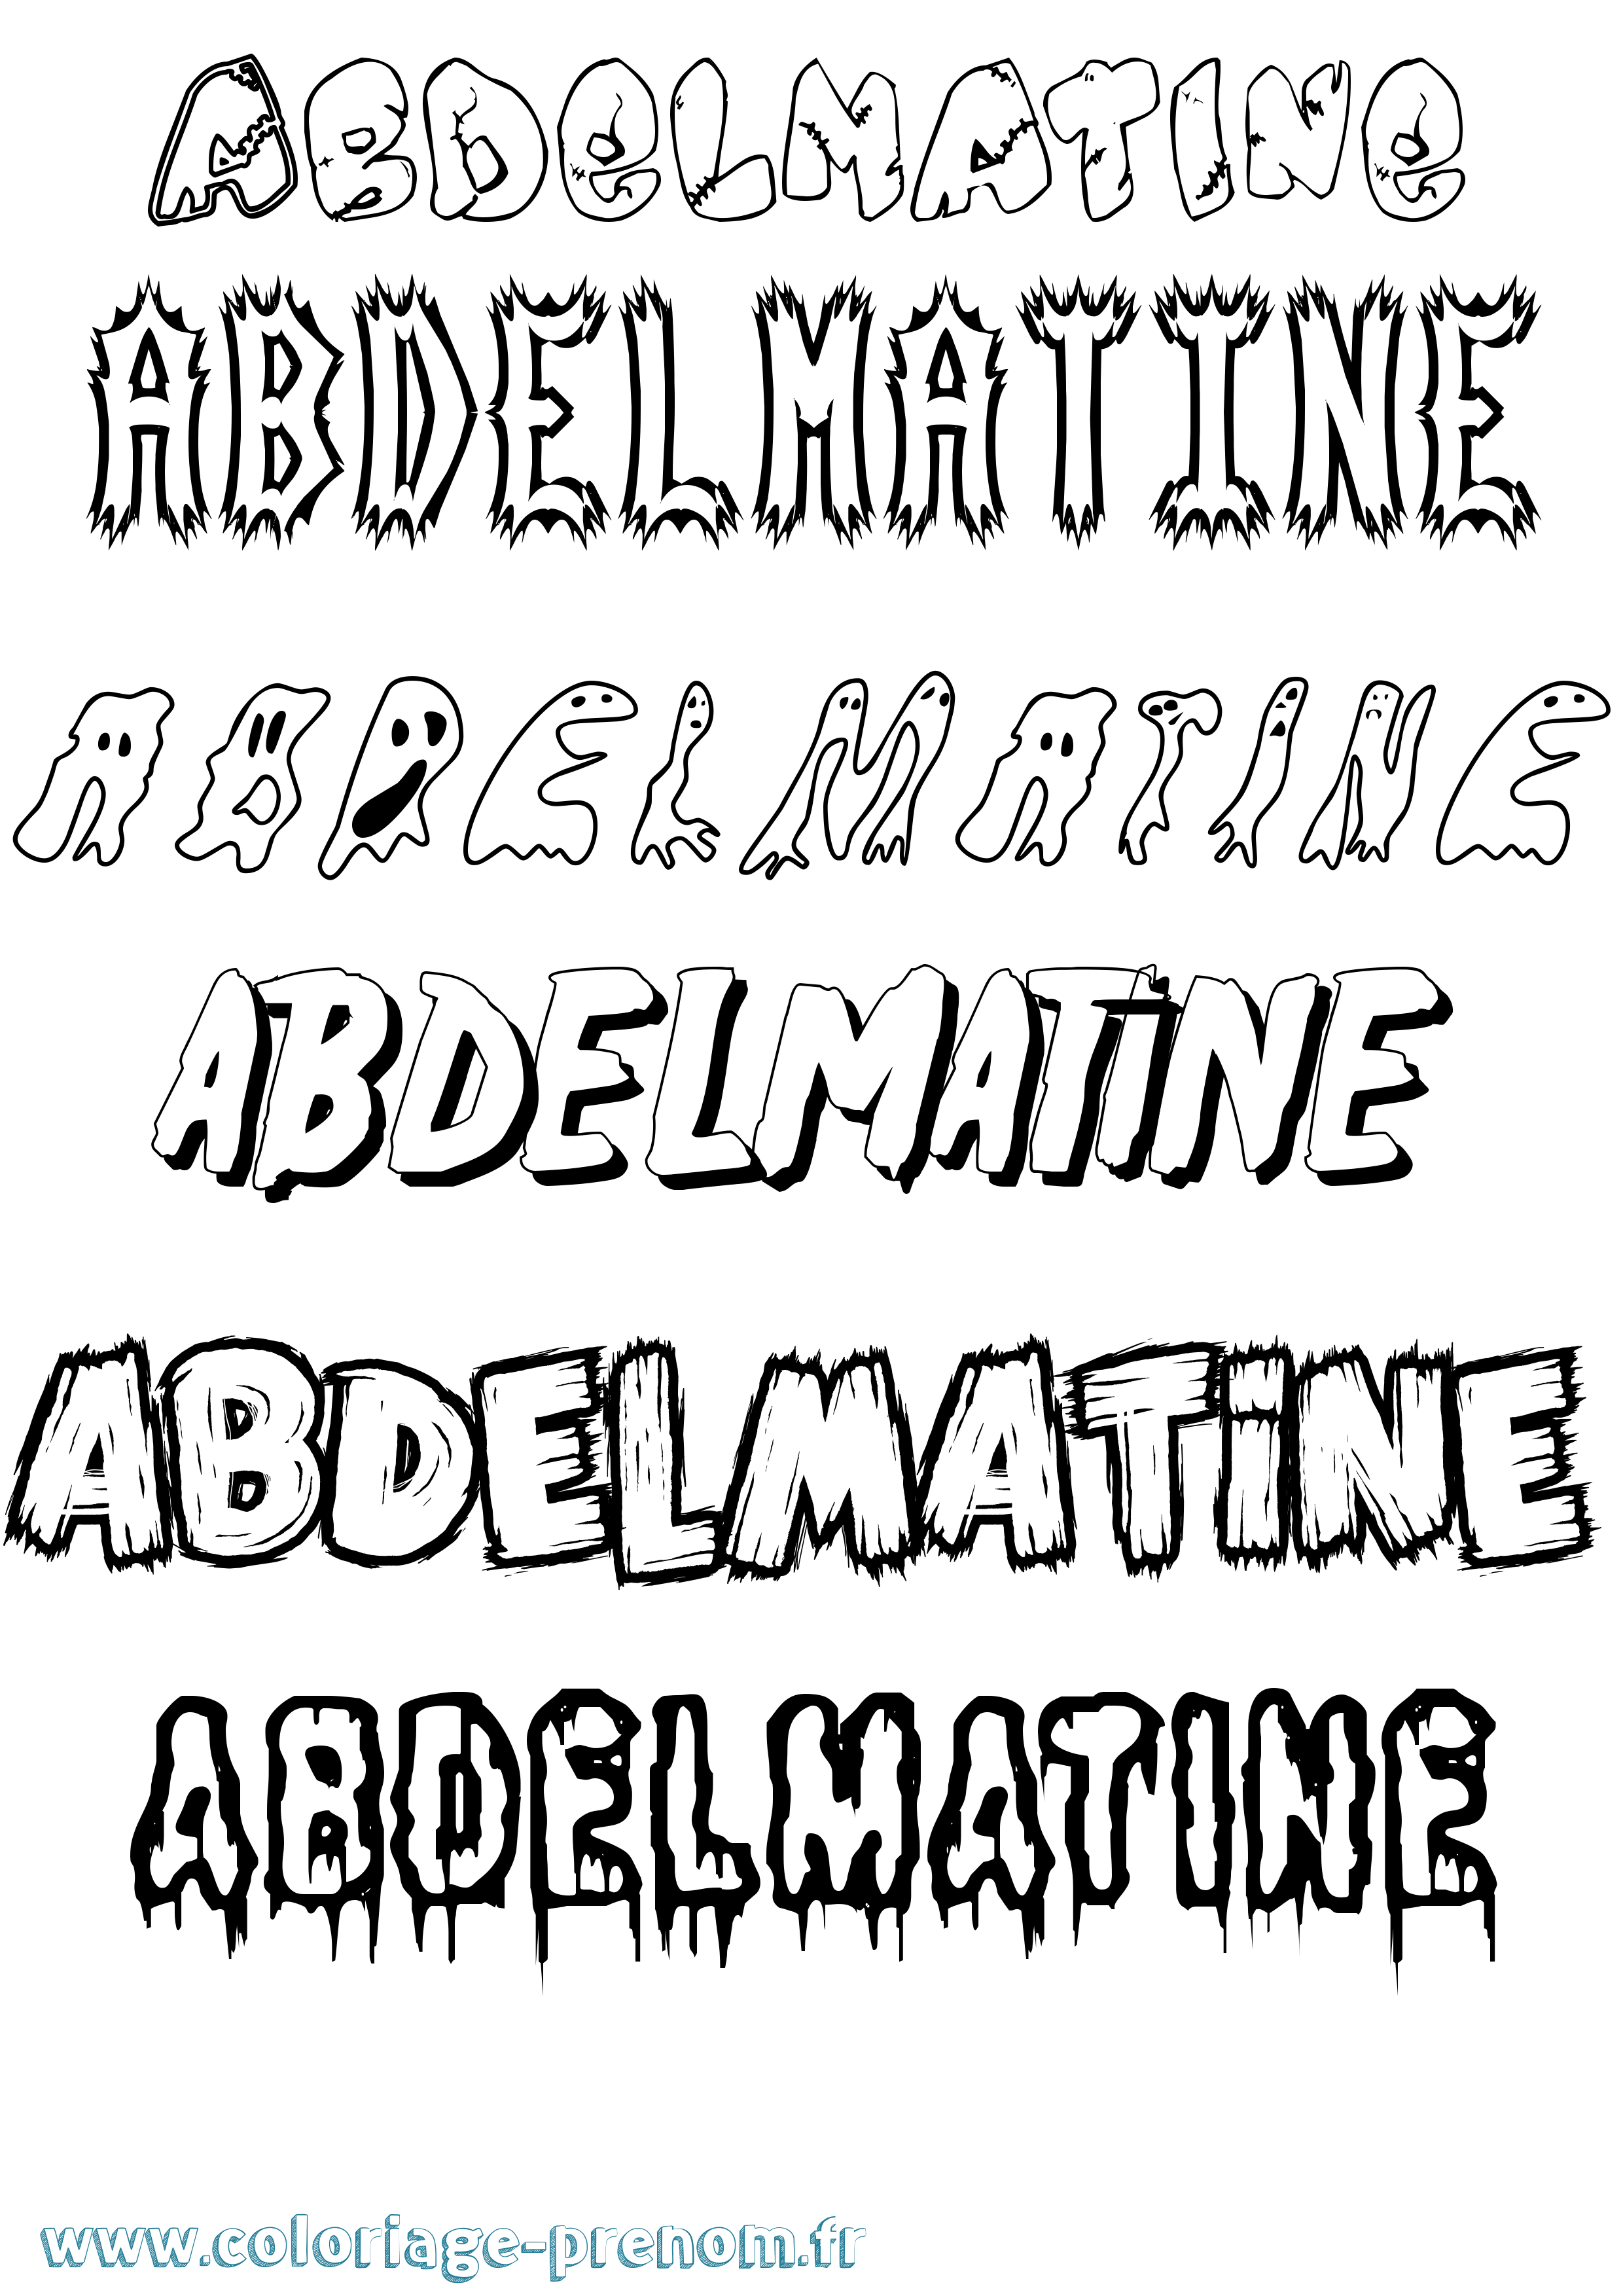 Coloriage prénom Abdelmatine